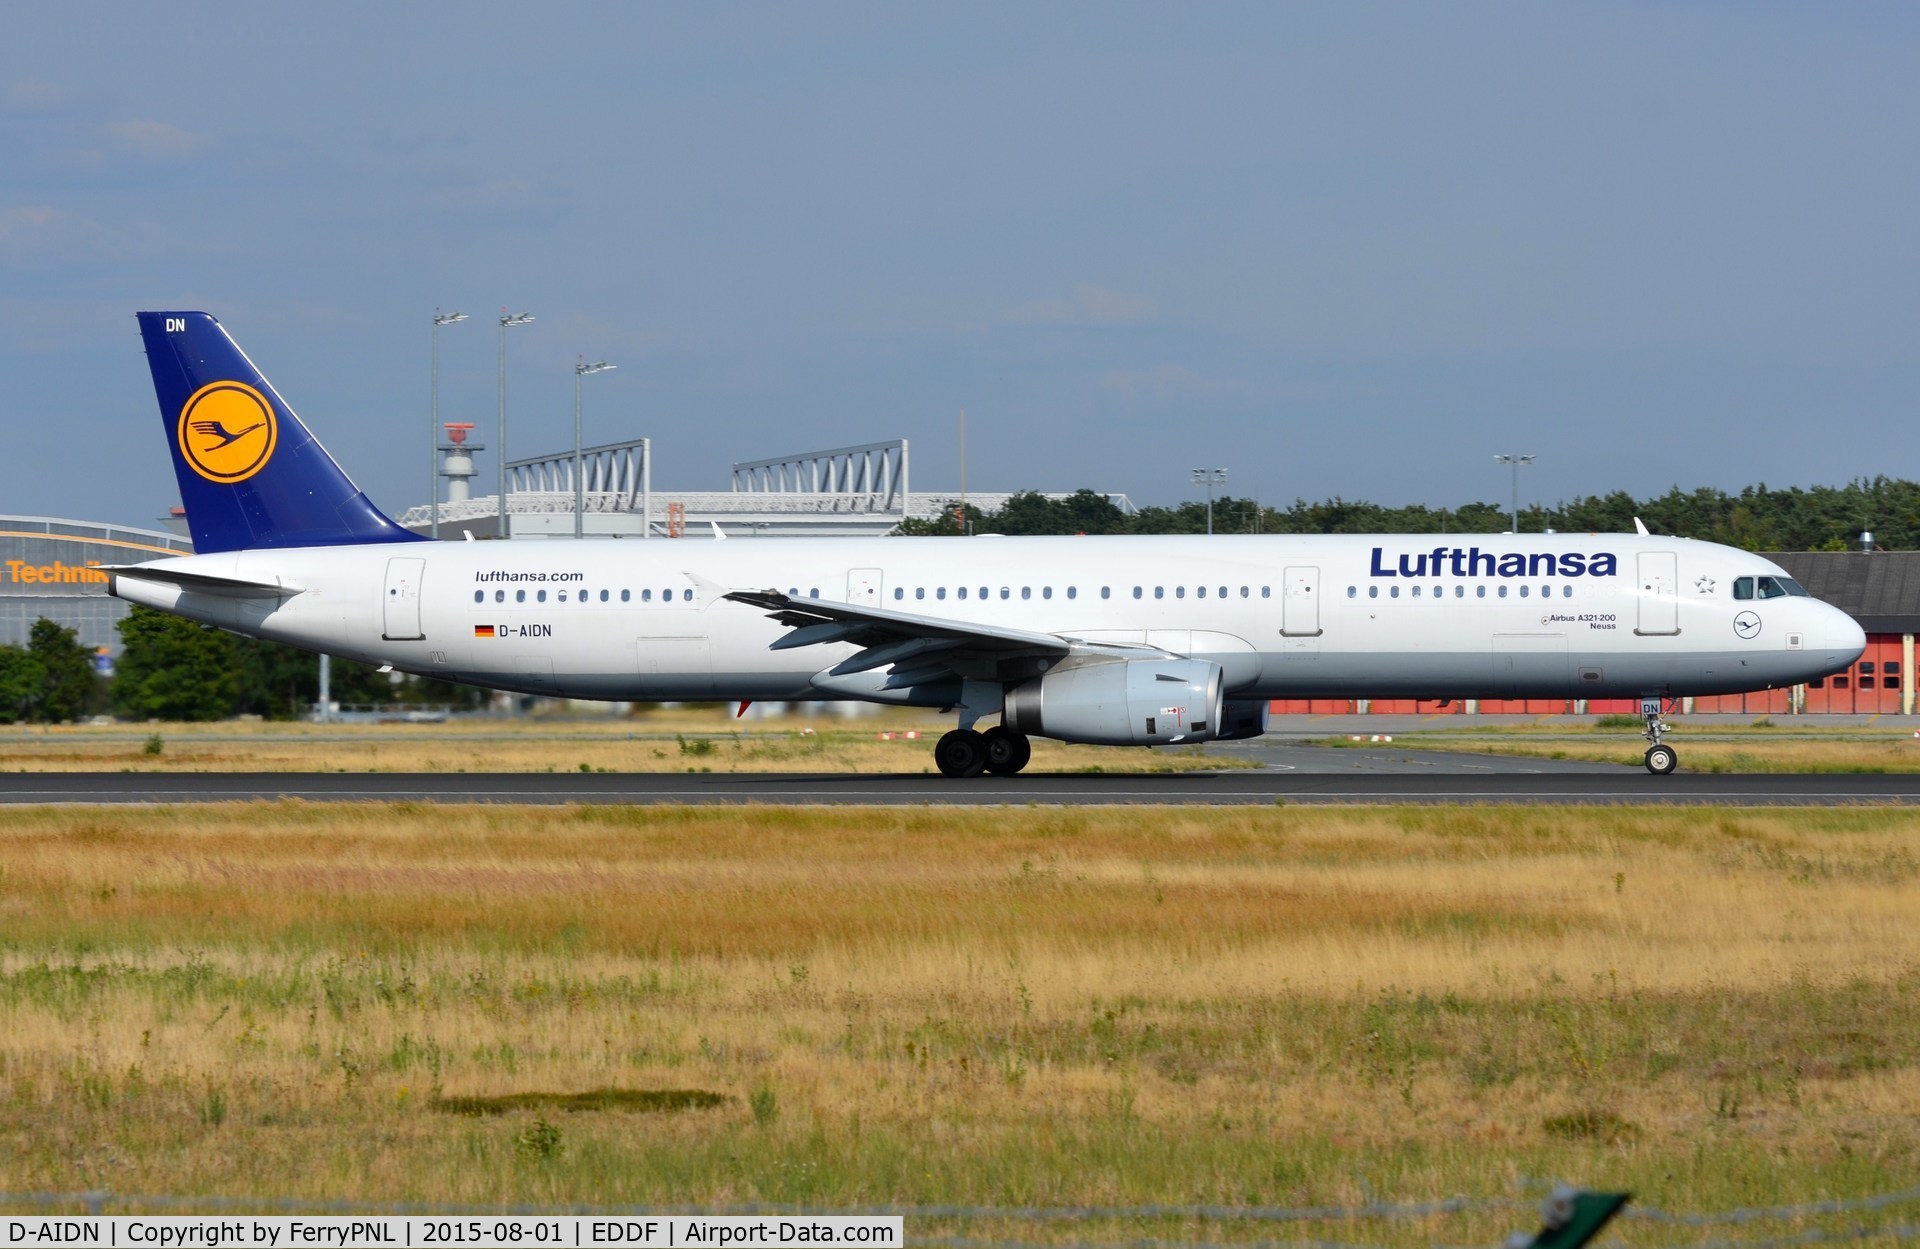 D-AIDN, 2011 Airbus A321-231 C/N 4976, Lufthansa A321 taking-off from FRA